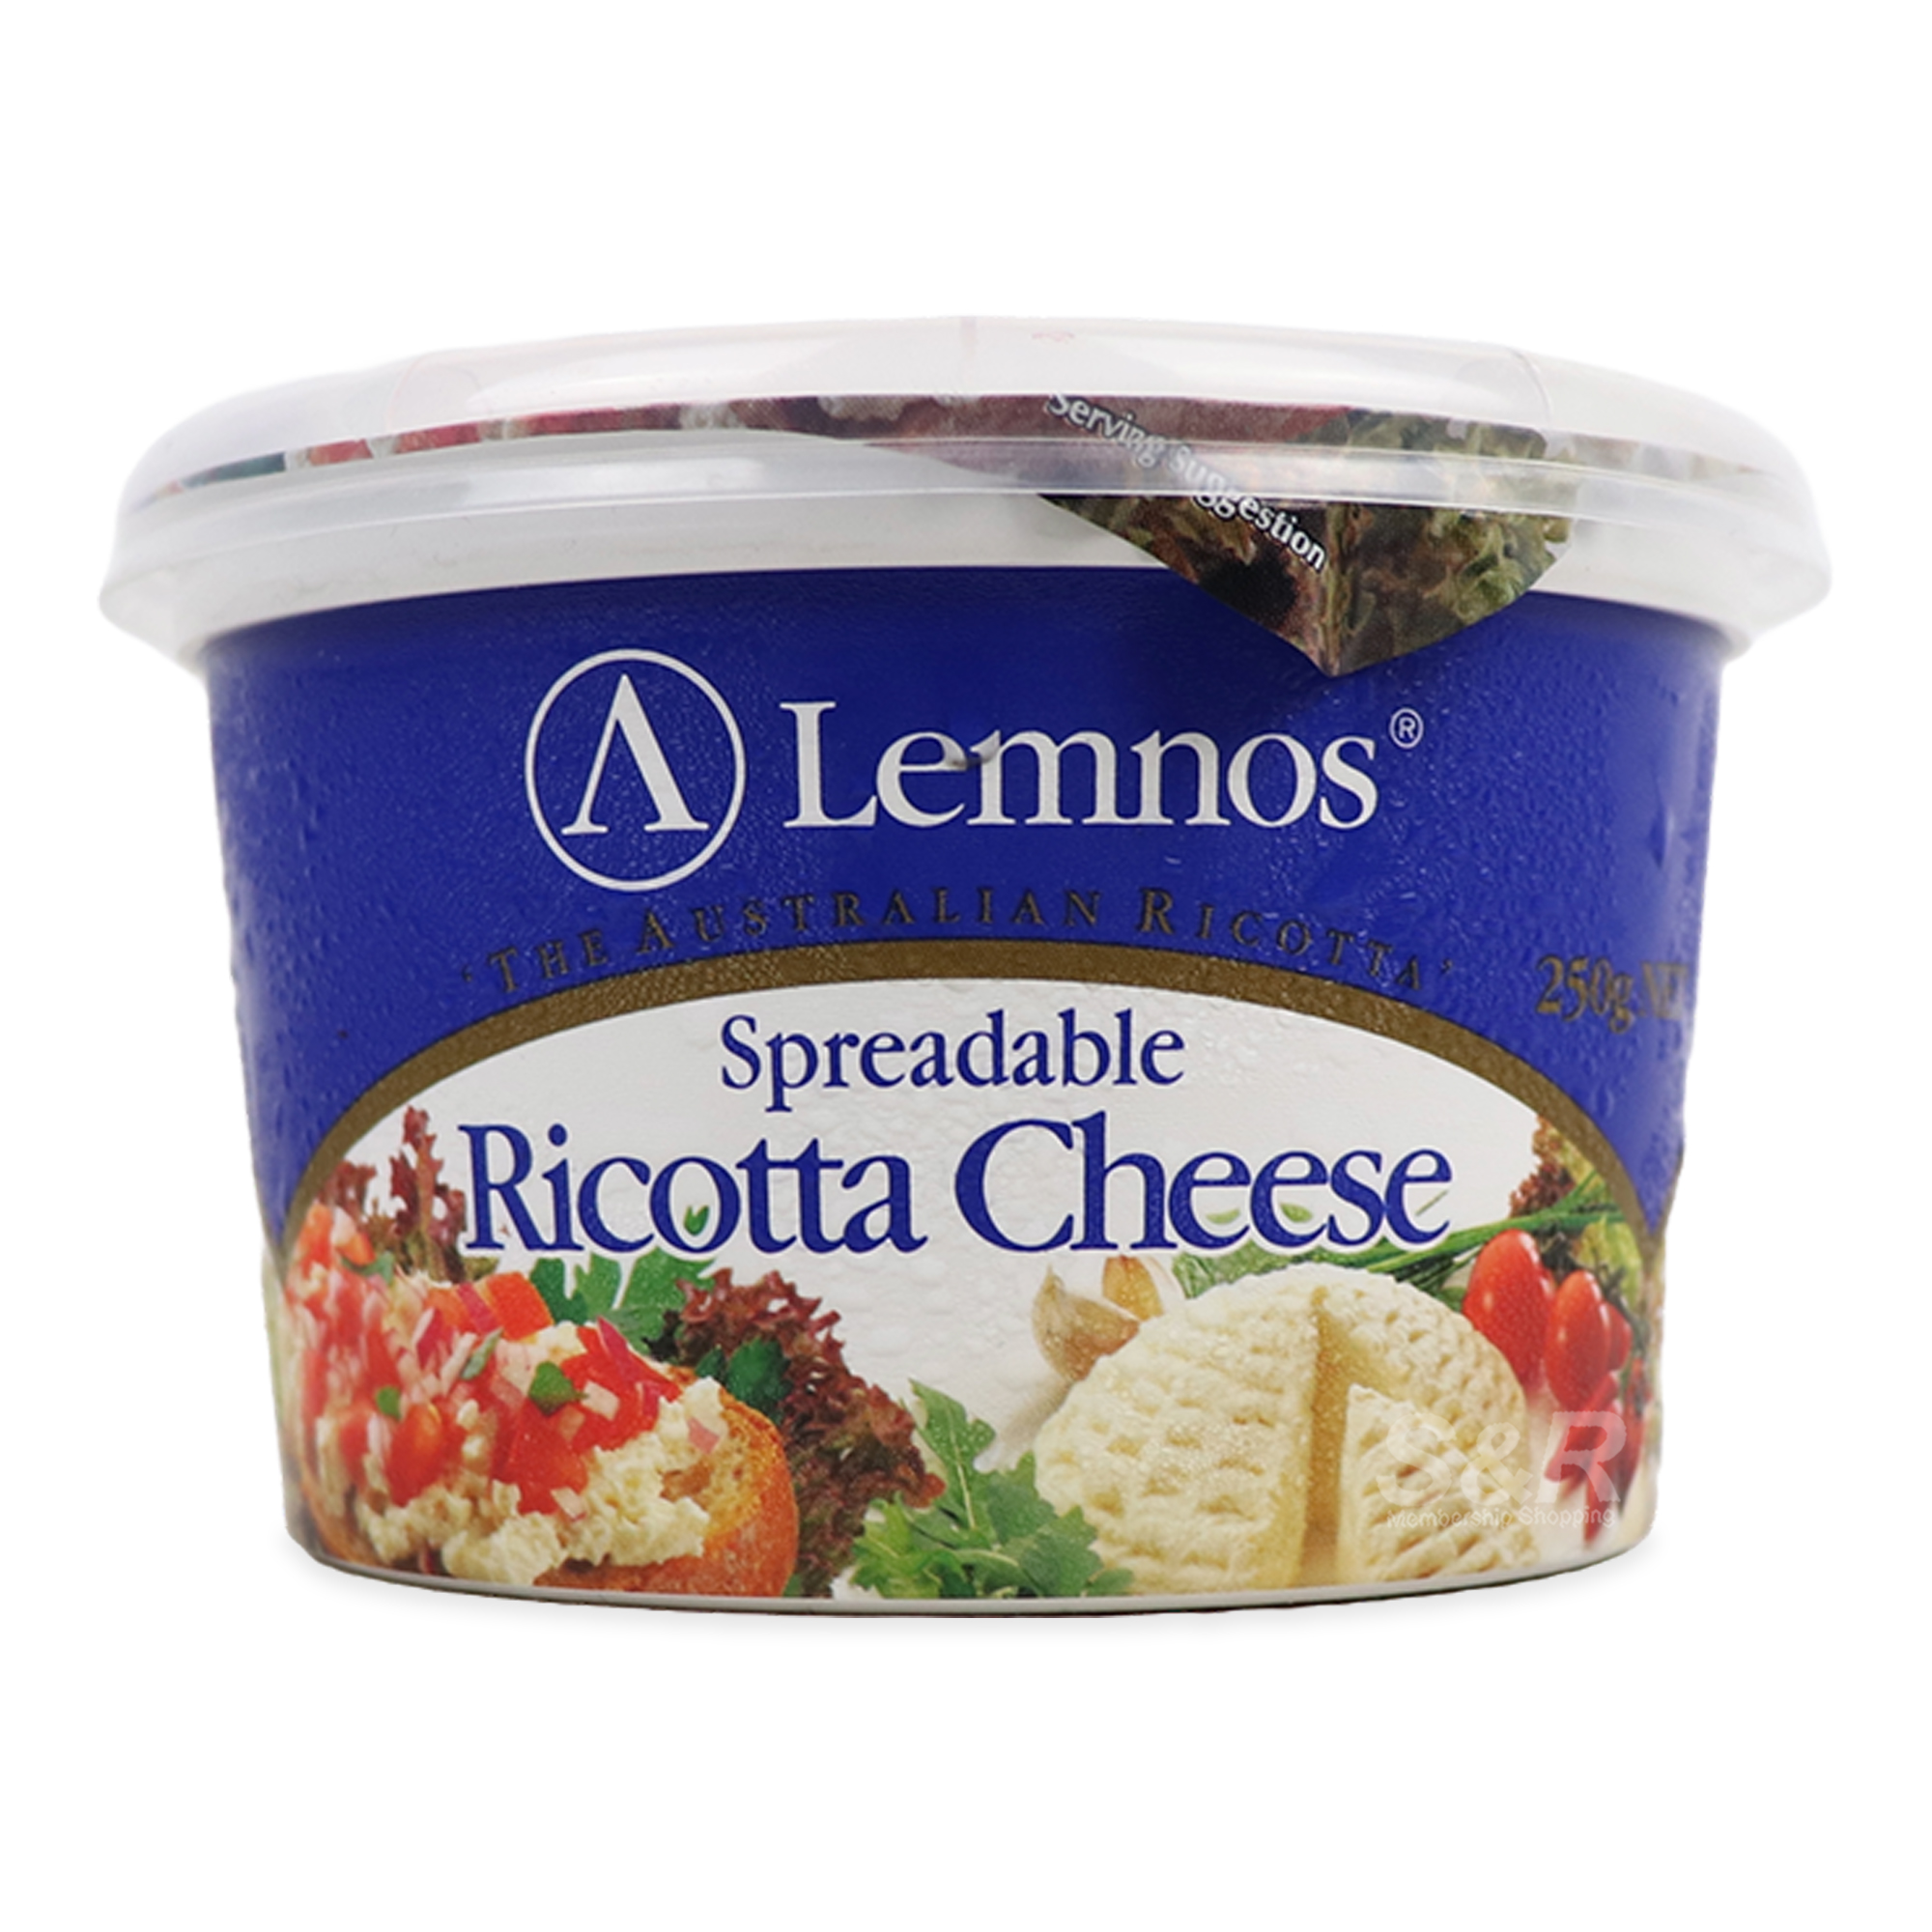 Lemnos Spreadable Ricotta Cheese 250g